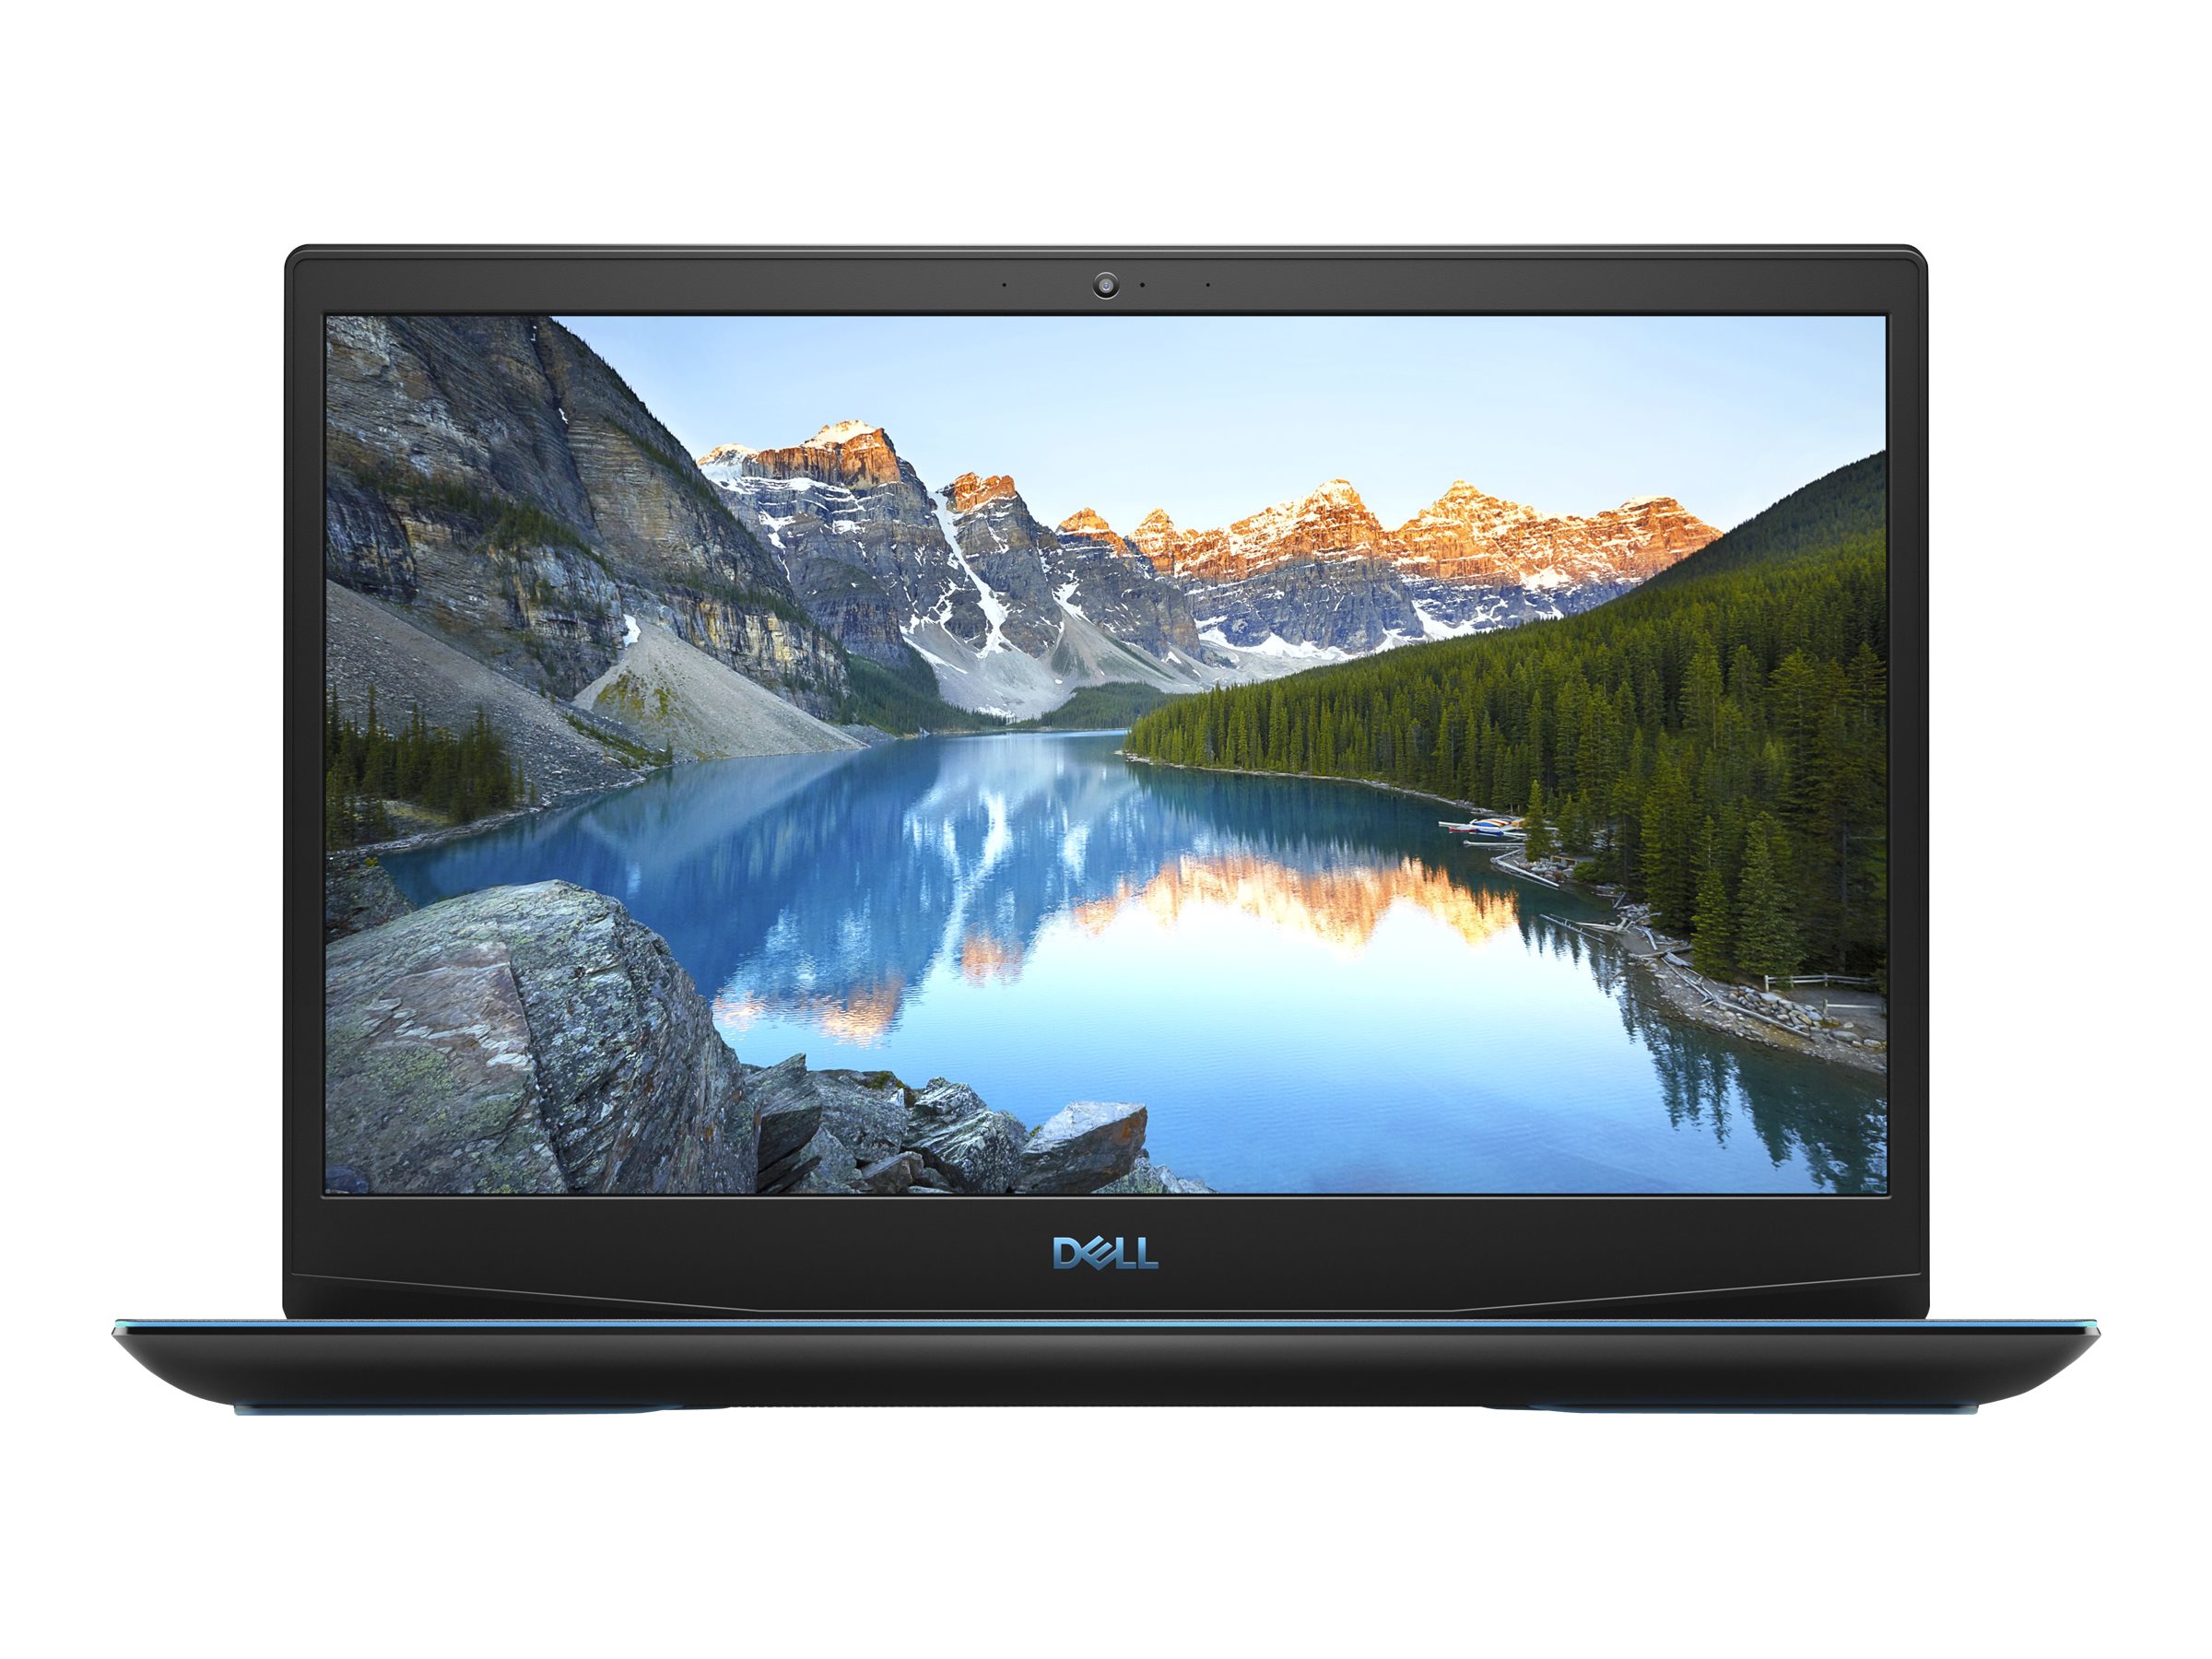 Dell G3 15 3590 - Intel Core i5 9300H / 2.4 GHz - Win 10 Home 64-bit - GF GTX 1660 Ti - 8 GB RAM - 512 GB SSD NVMe - 15.6" 1920 x 1080 (Full HD) - Wi-Fi 5 - black with blue logo - kbd: US - image 4 of 14